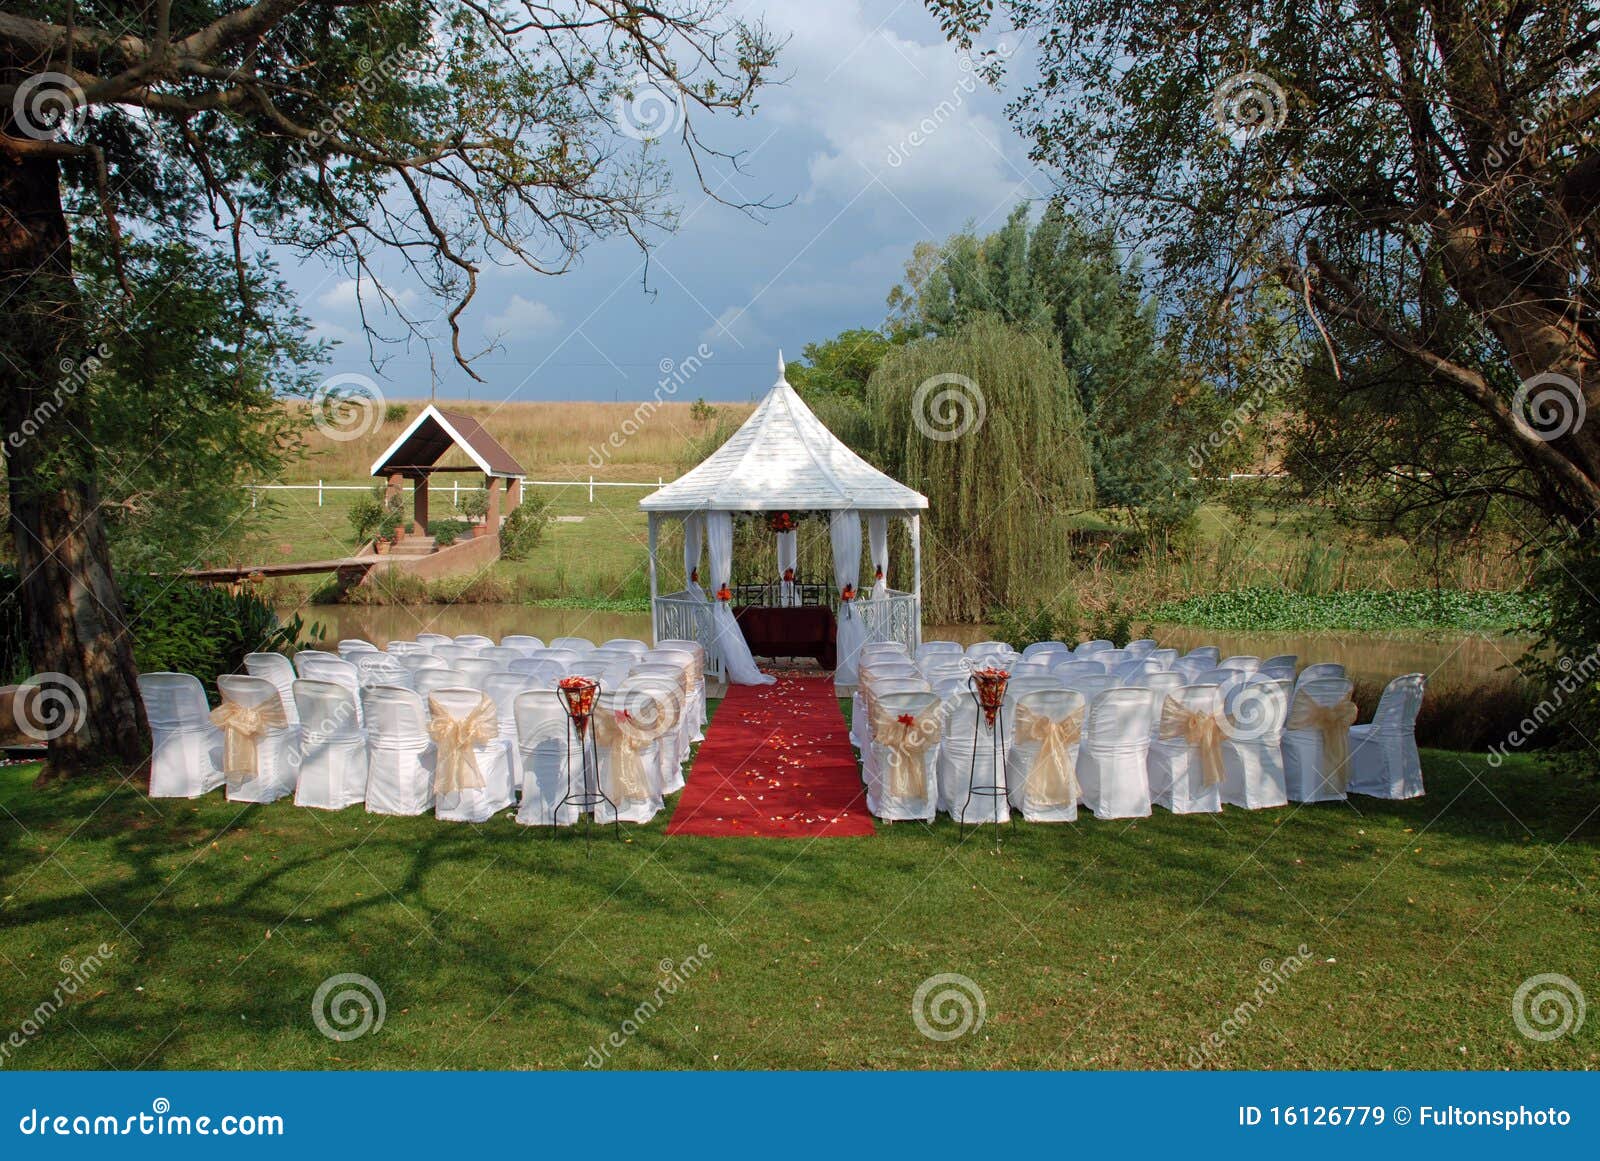 romantic wedding day venue